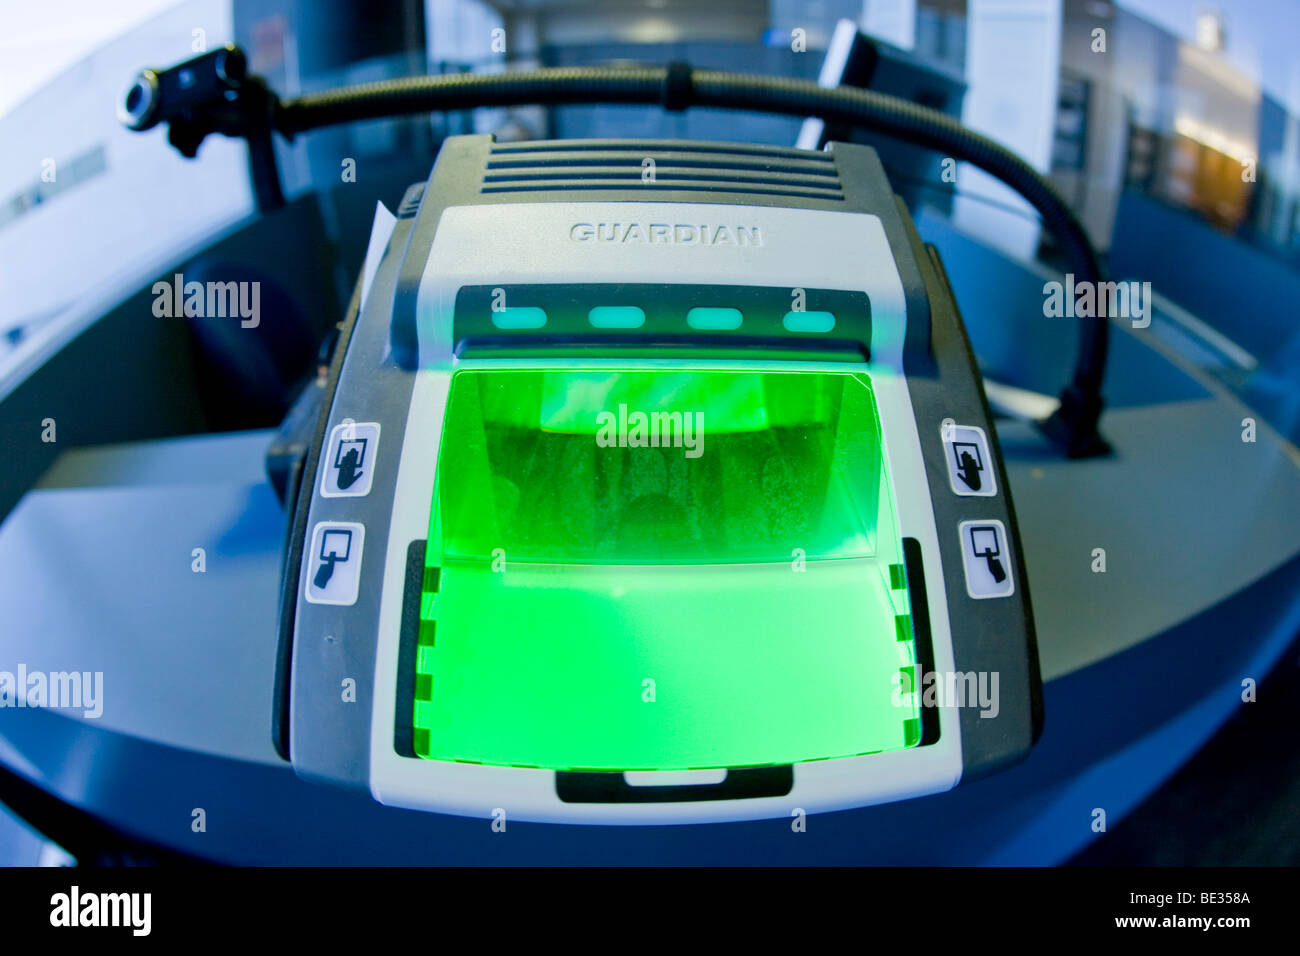 Fingerprint scanner and digital camera for controlling biometric data, Los Angeles, USA Stock Photo